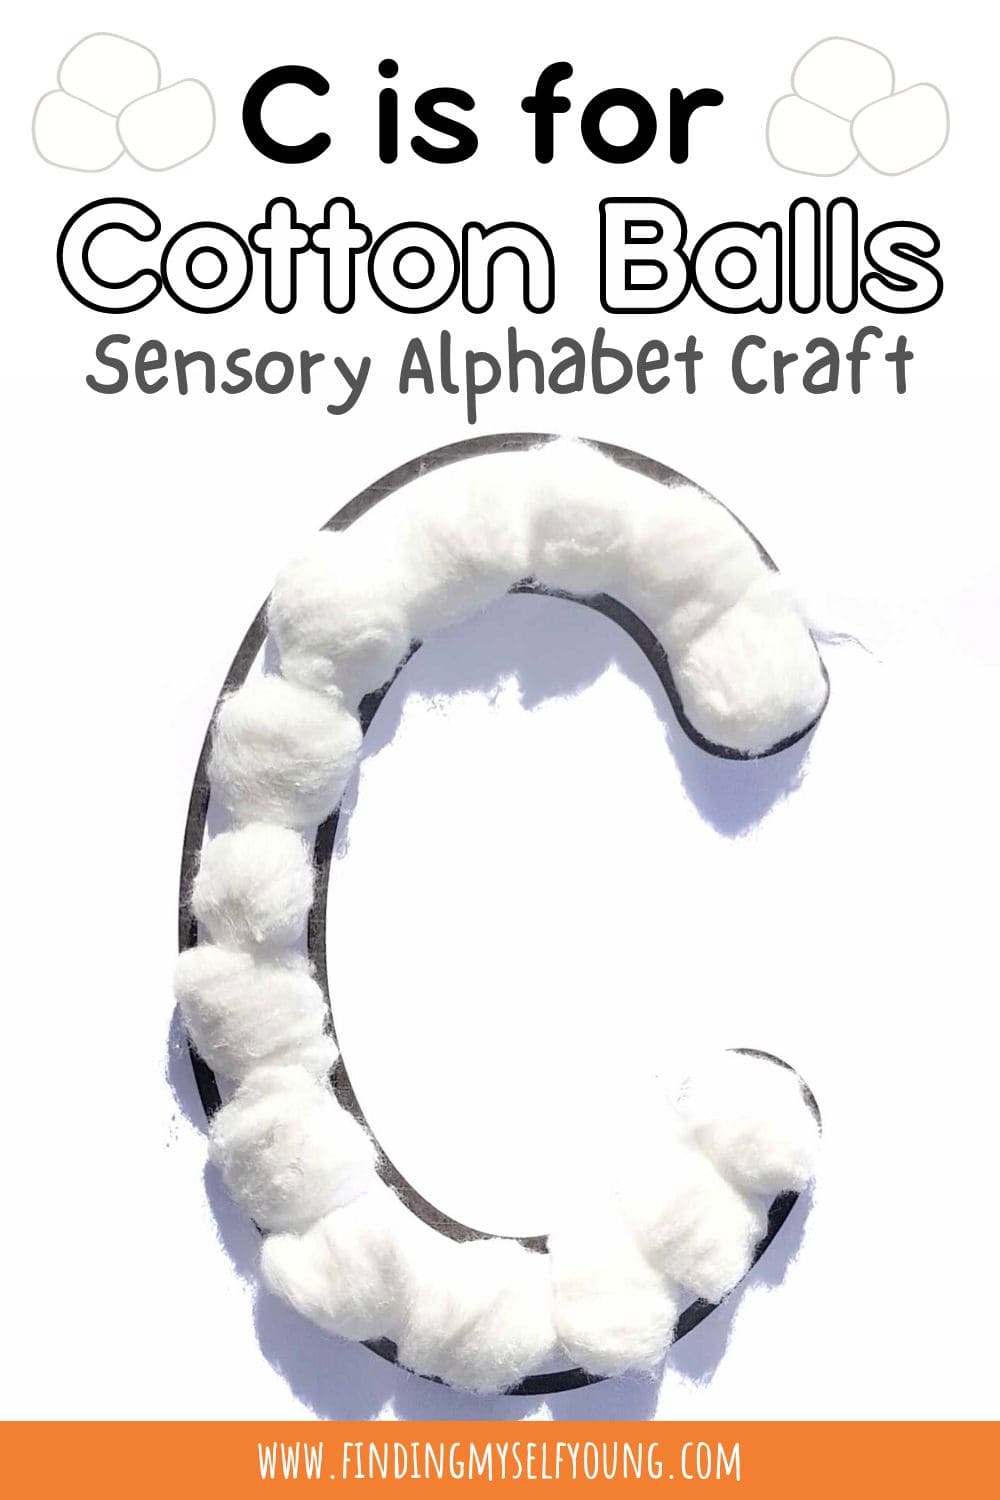 C is for cotton balls sensory alphabet craft